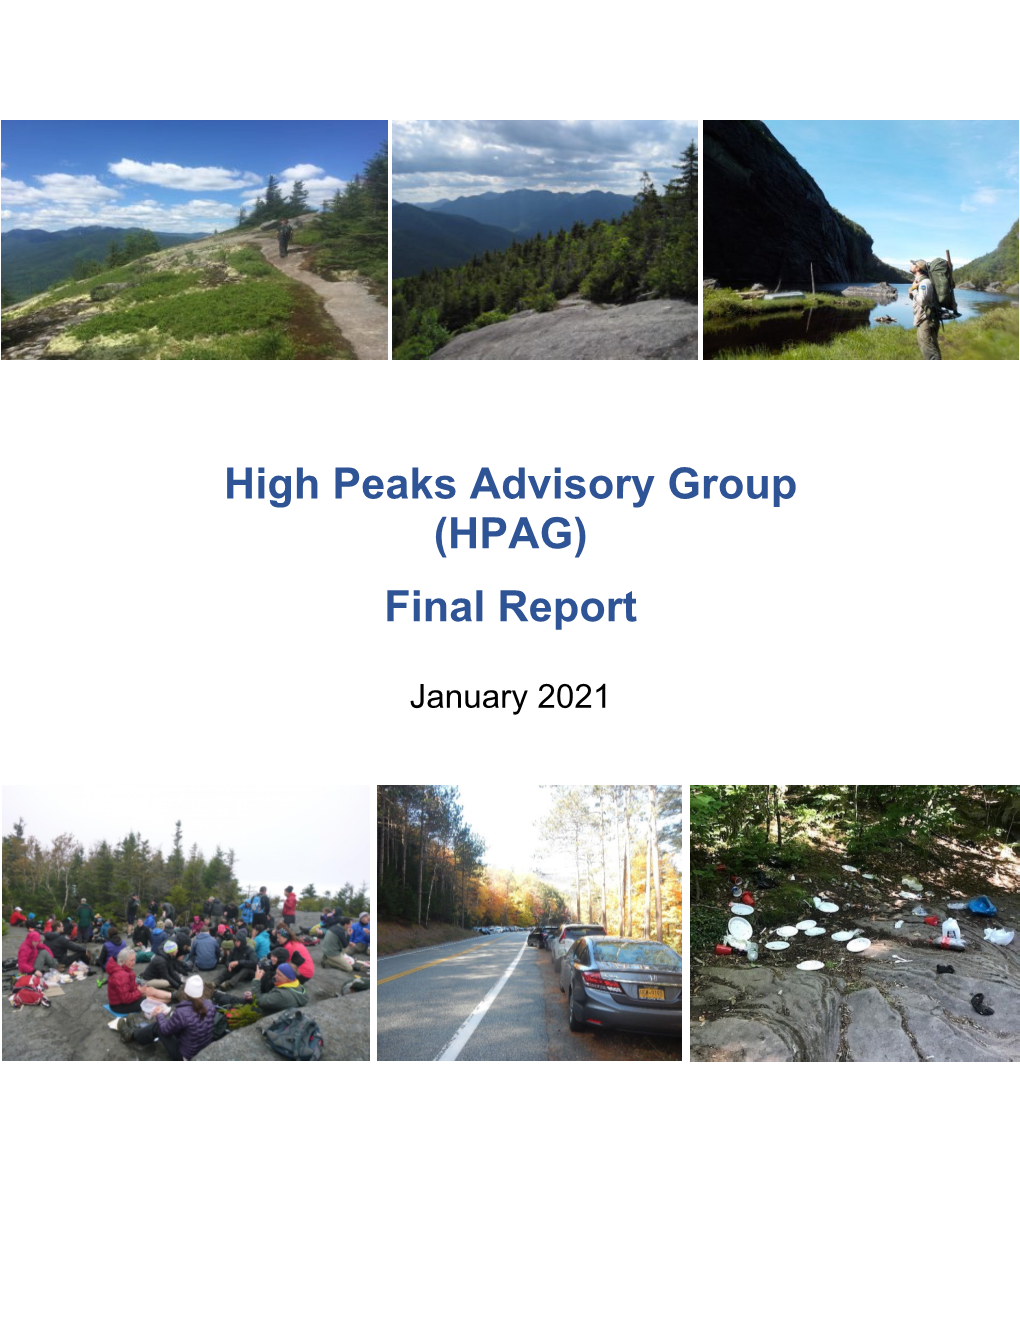 High Peaks Advisory Group Final Report